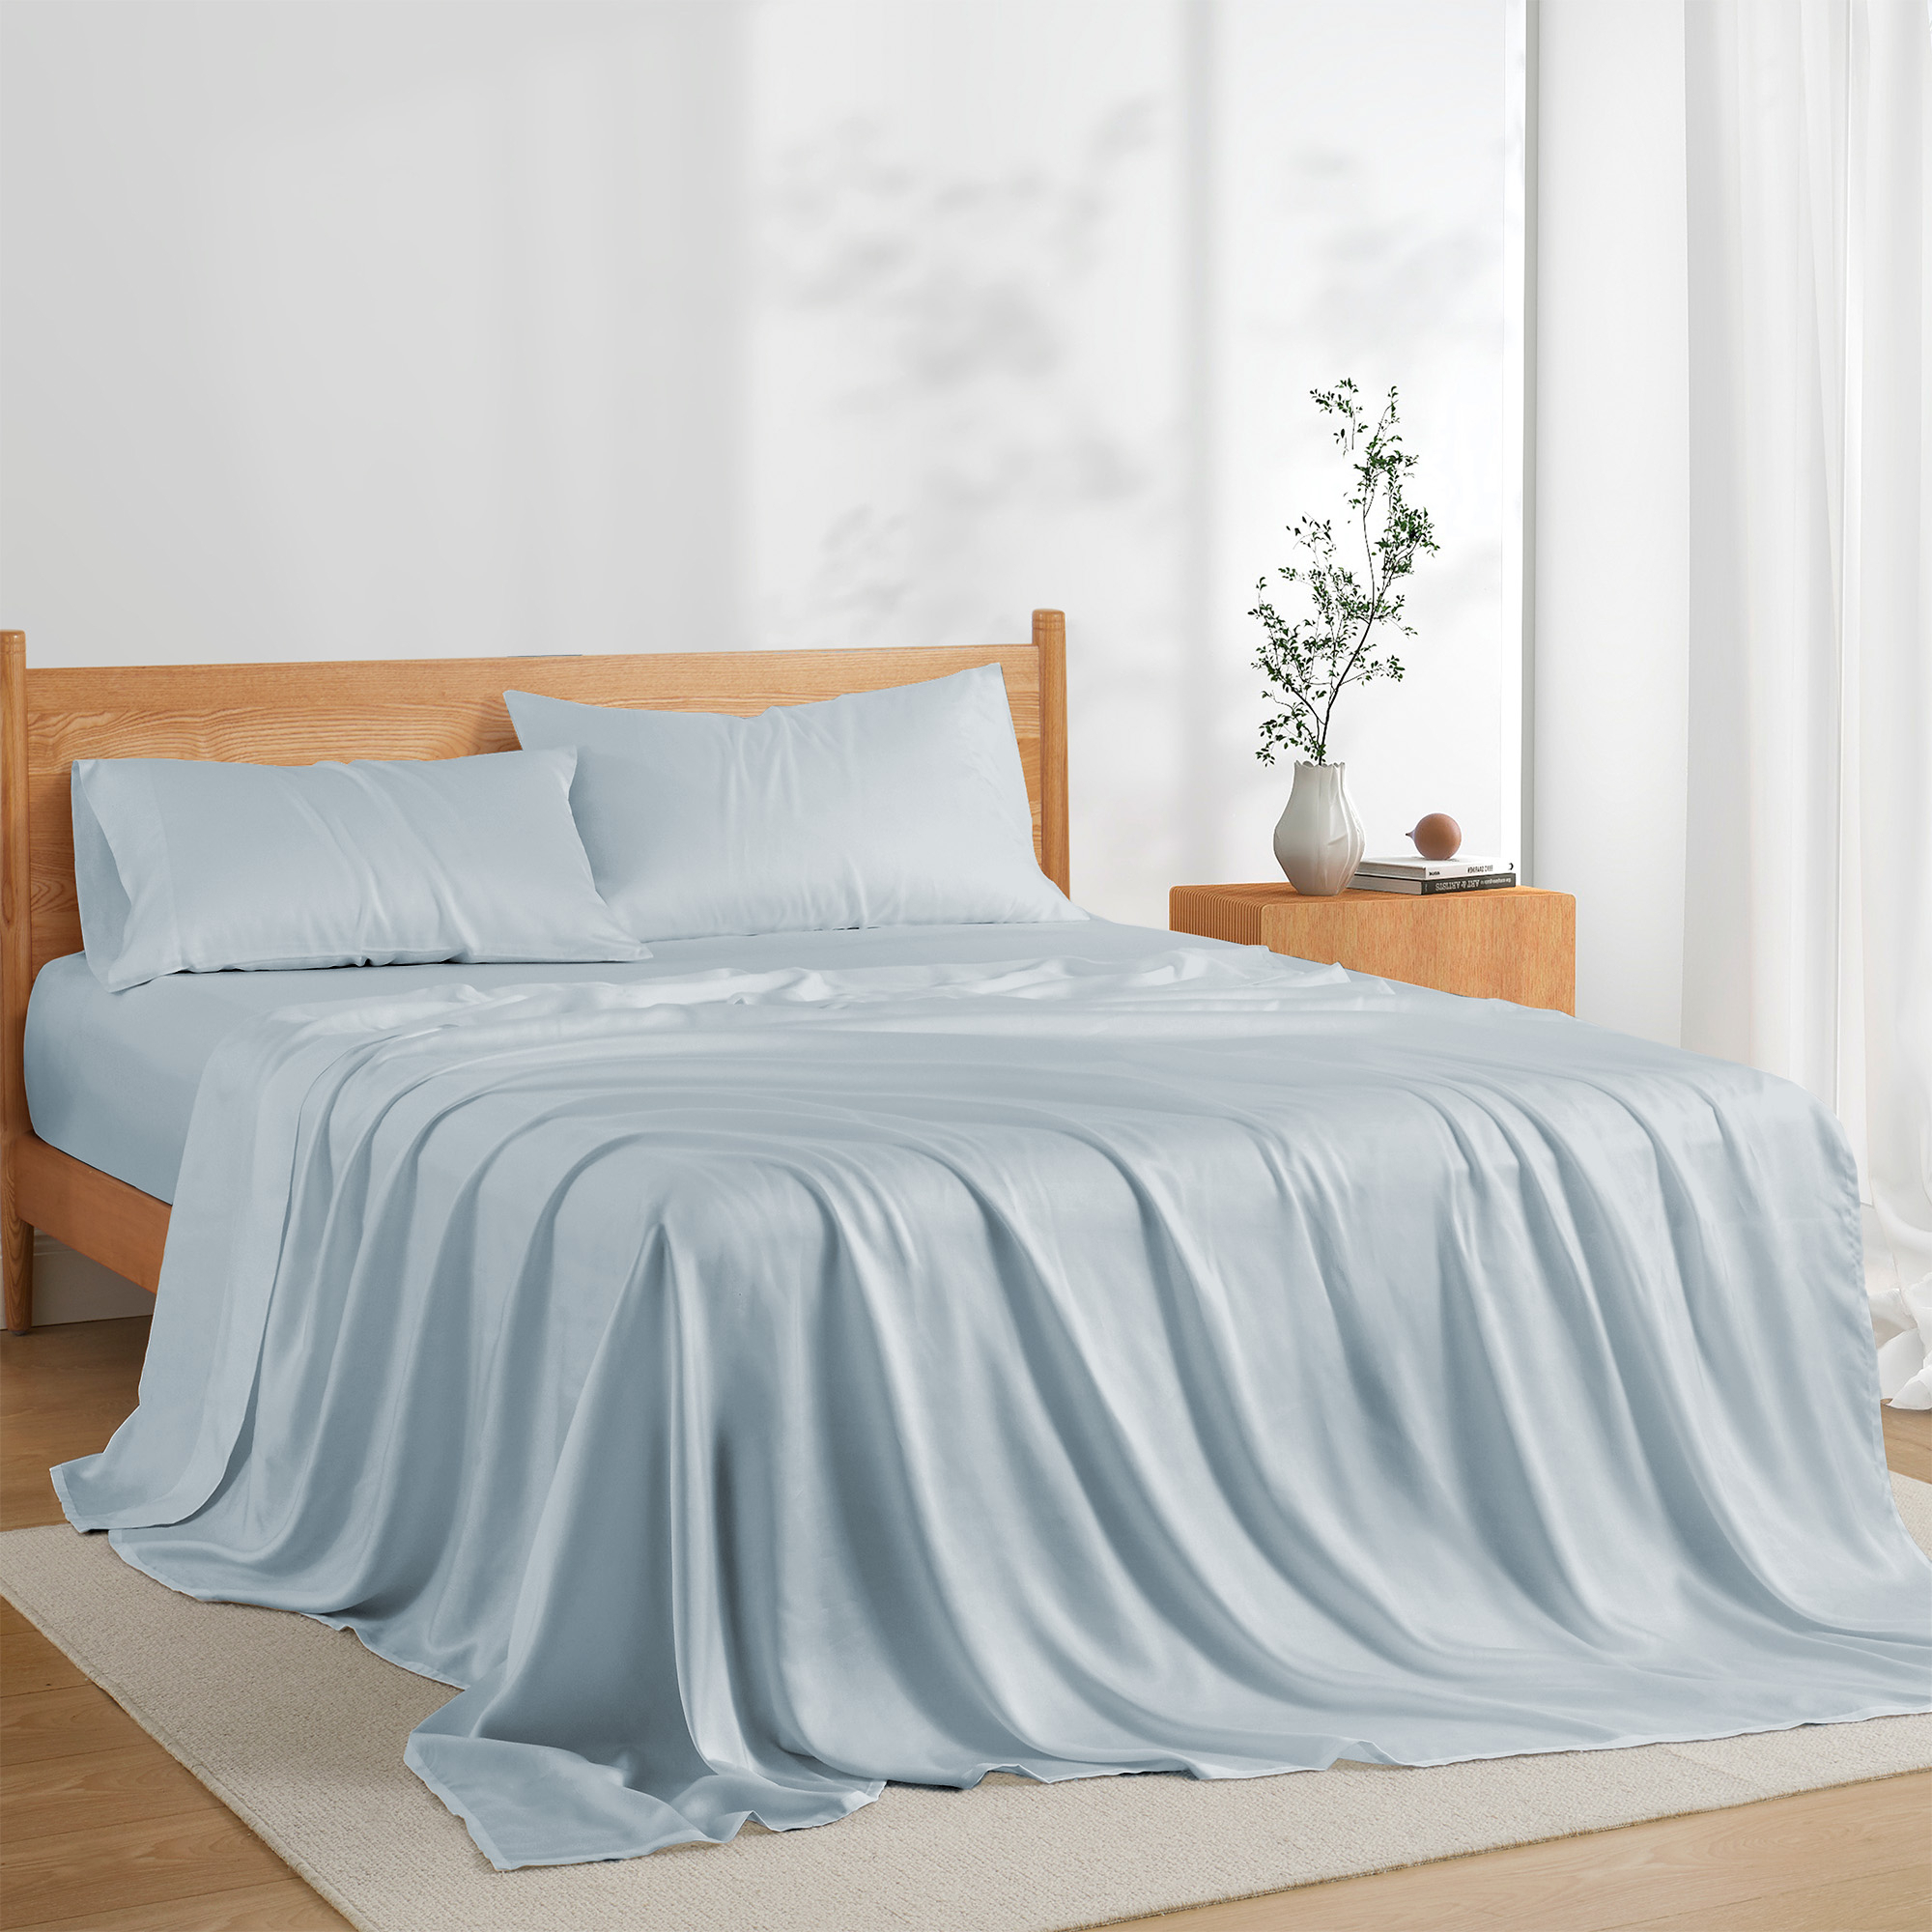 Silky Soft TENCELâ¢ Lyocell Cooling Sheet Set-Breathability And Moisture-wicking Bedding Set - Misty Blue, Queen